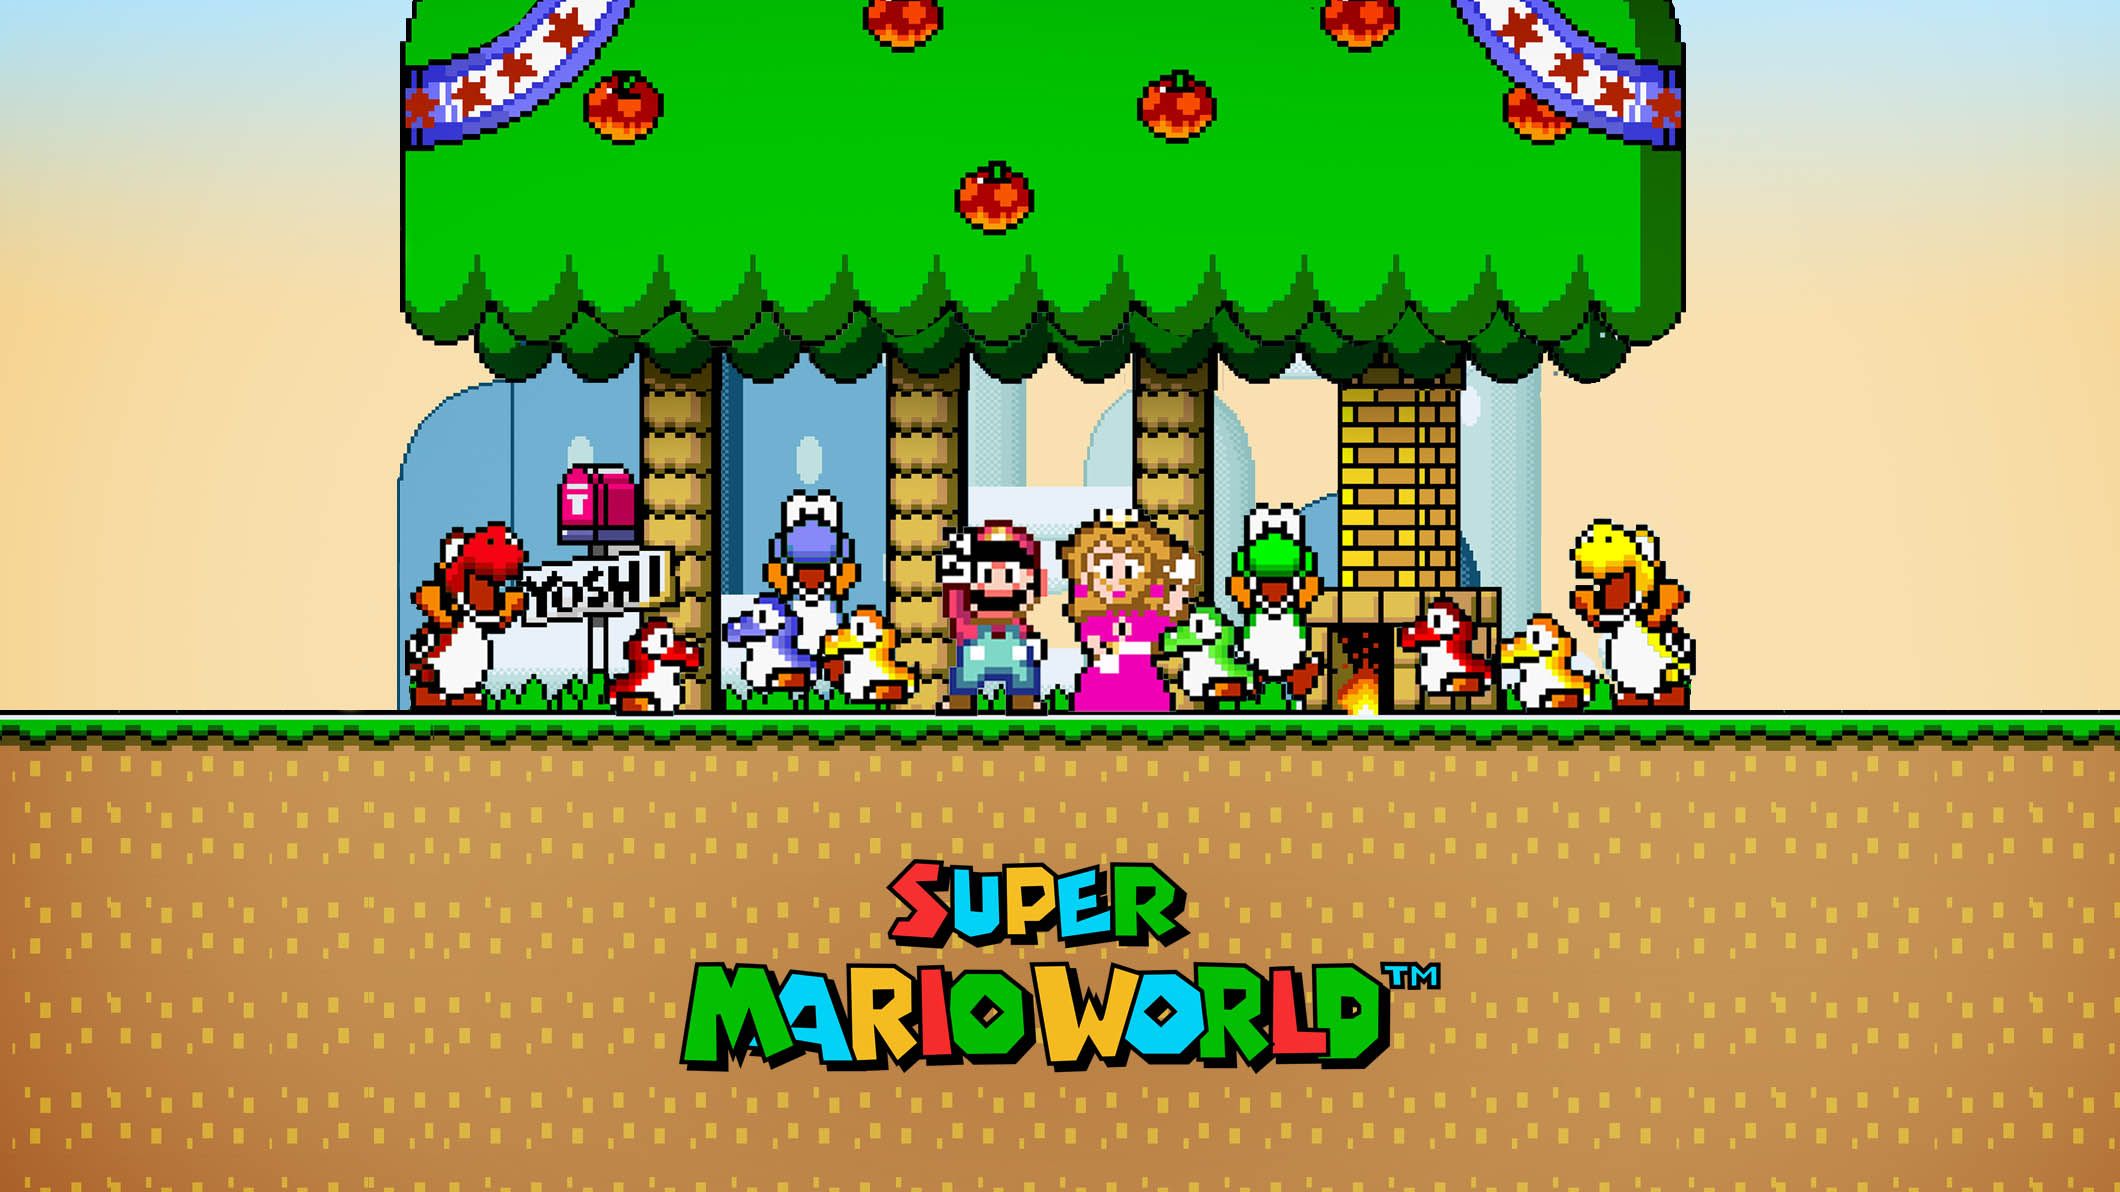 Super mario world. Super Mario World 1990. Super Mario World игра. Супер Нинтендо супер Марио мир 2. Super Mario World super Nintendo.